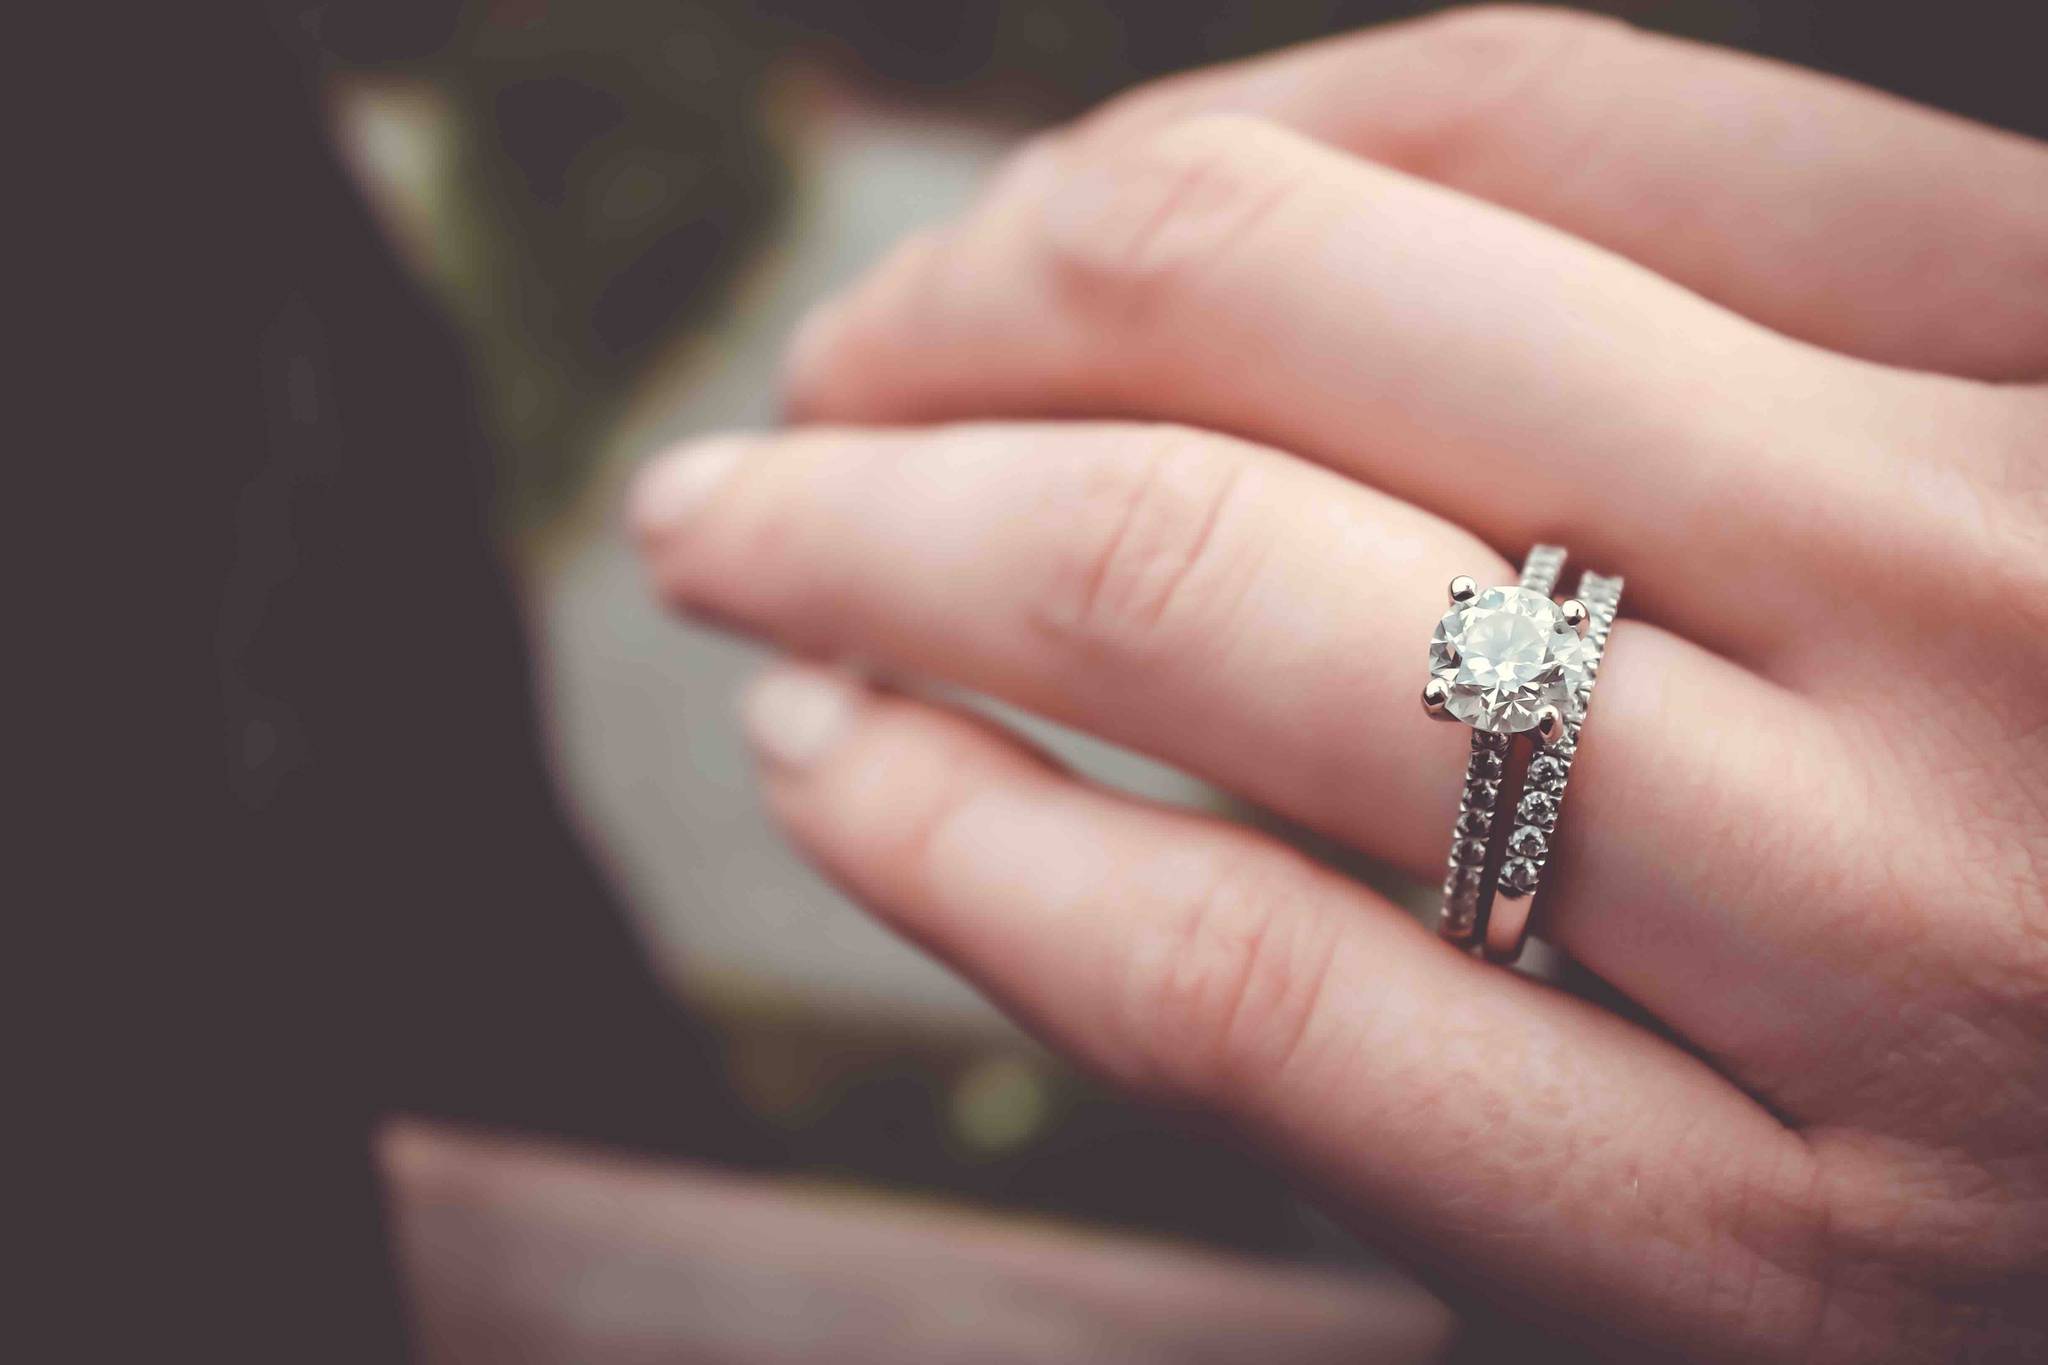 Diamond dupe engagement rings prove popular